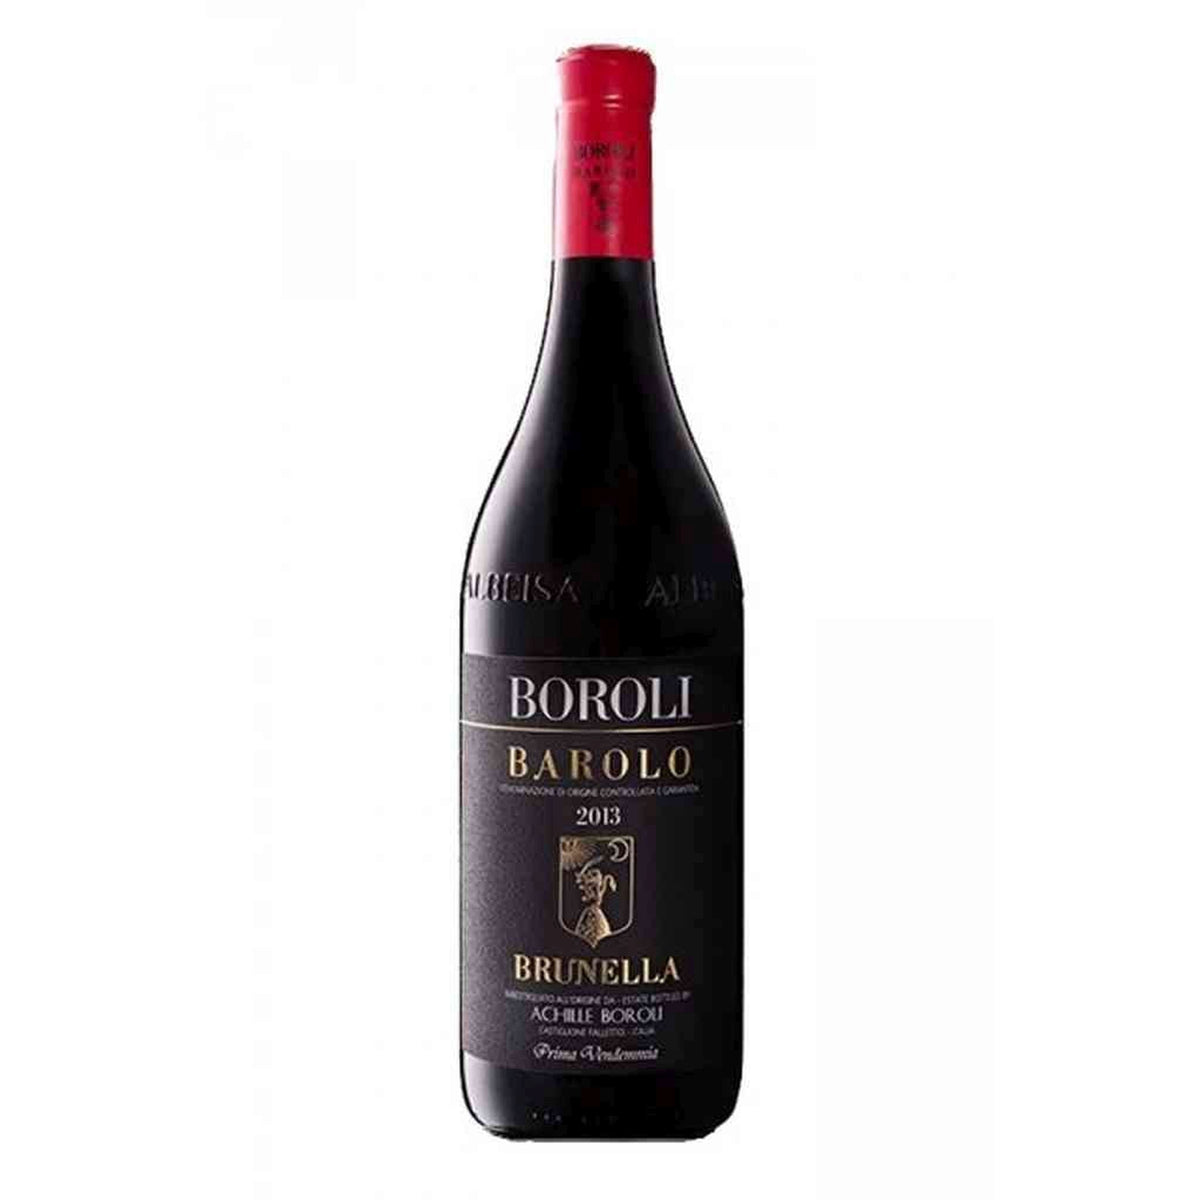 Boroli-Rotwein-Nebbiolo-2013 Barolo Cru Brunella DMG-WINECOM